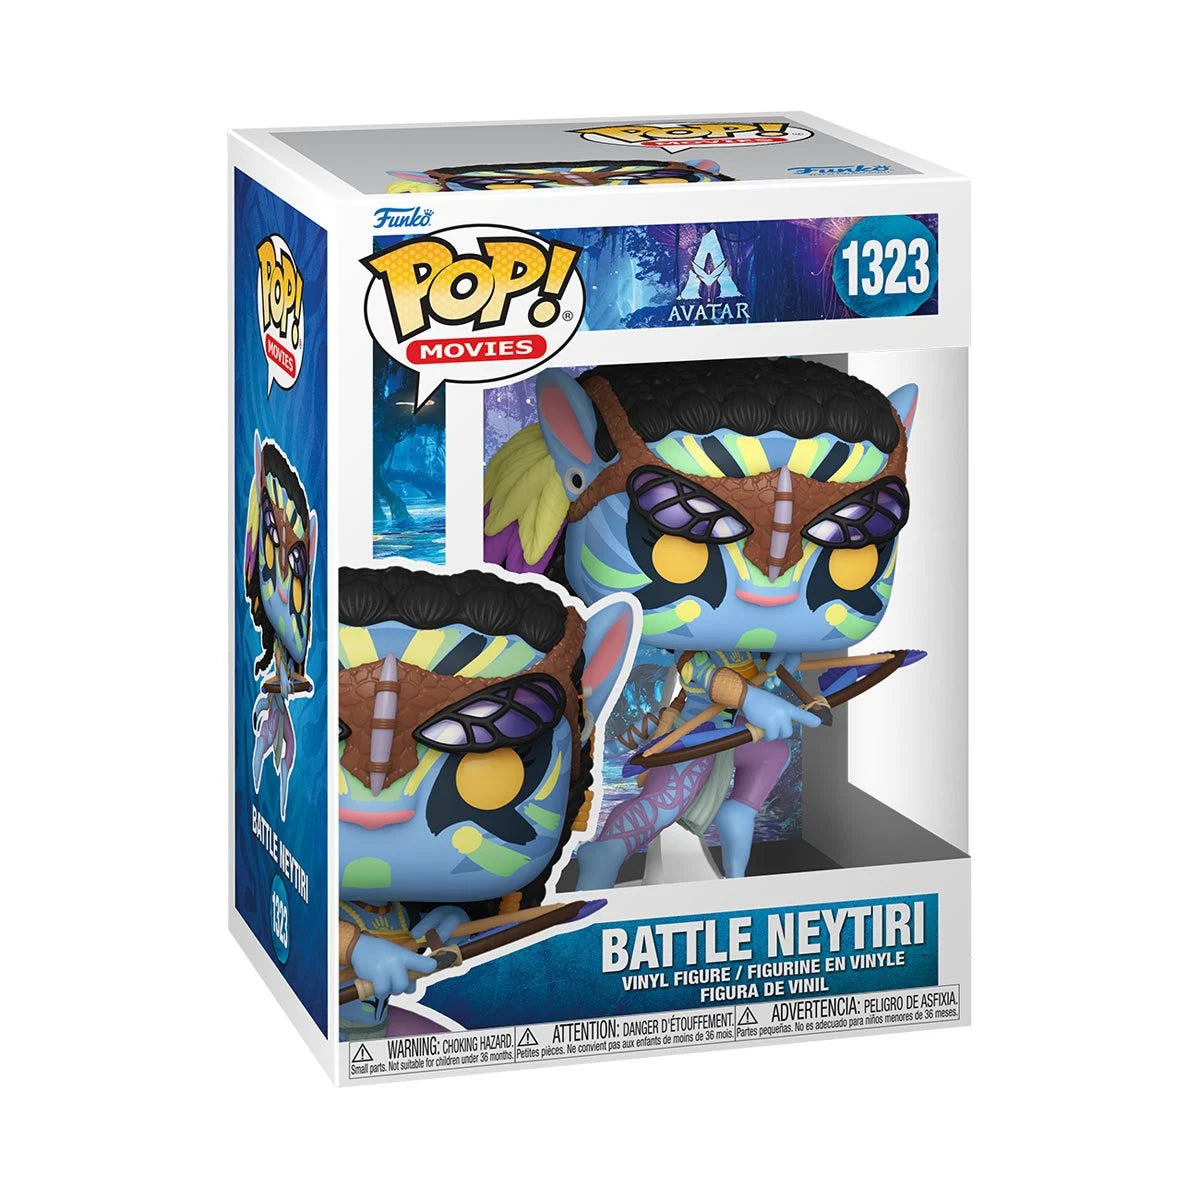 Battle Neytiri Avatar Pop! Vinyl Figure